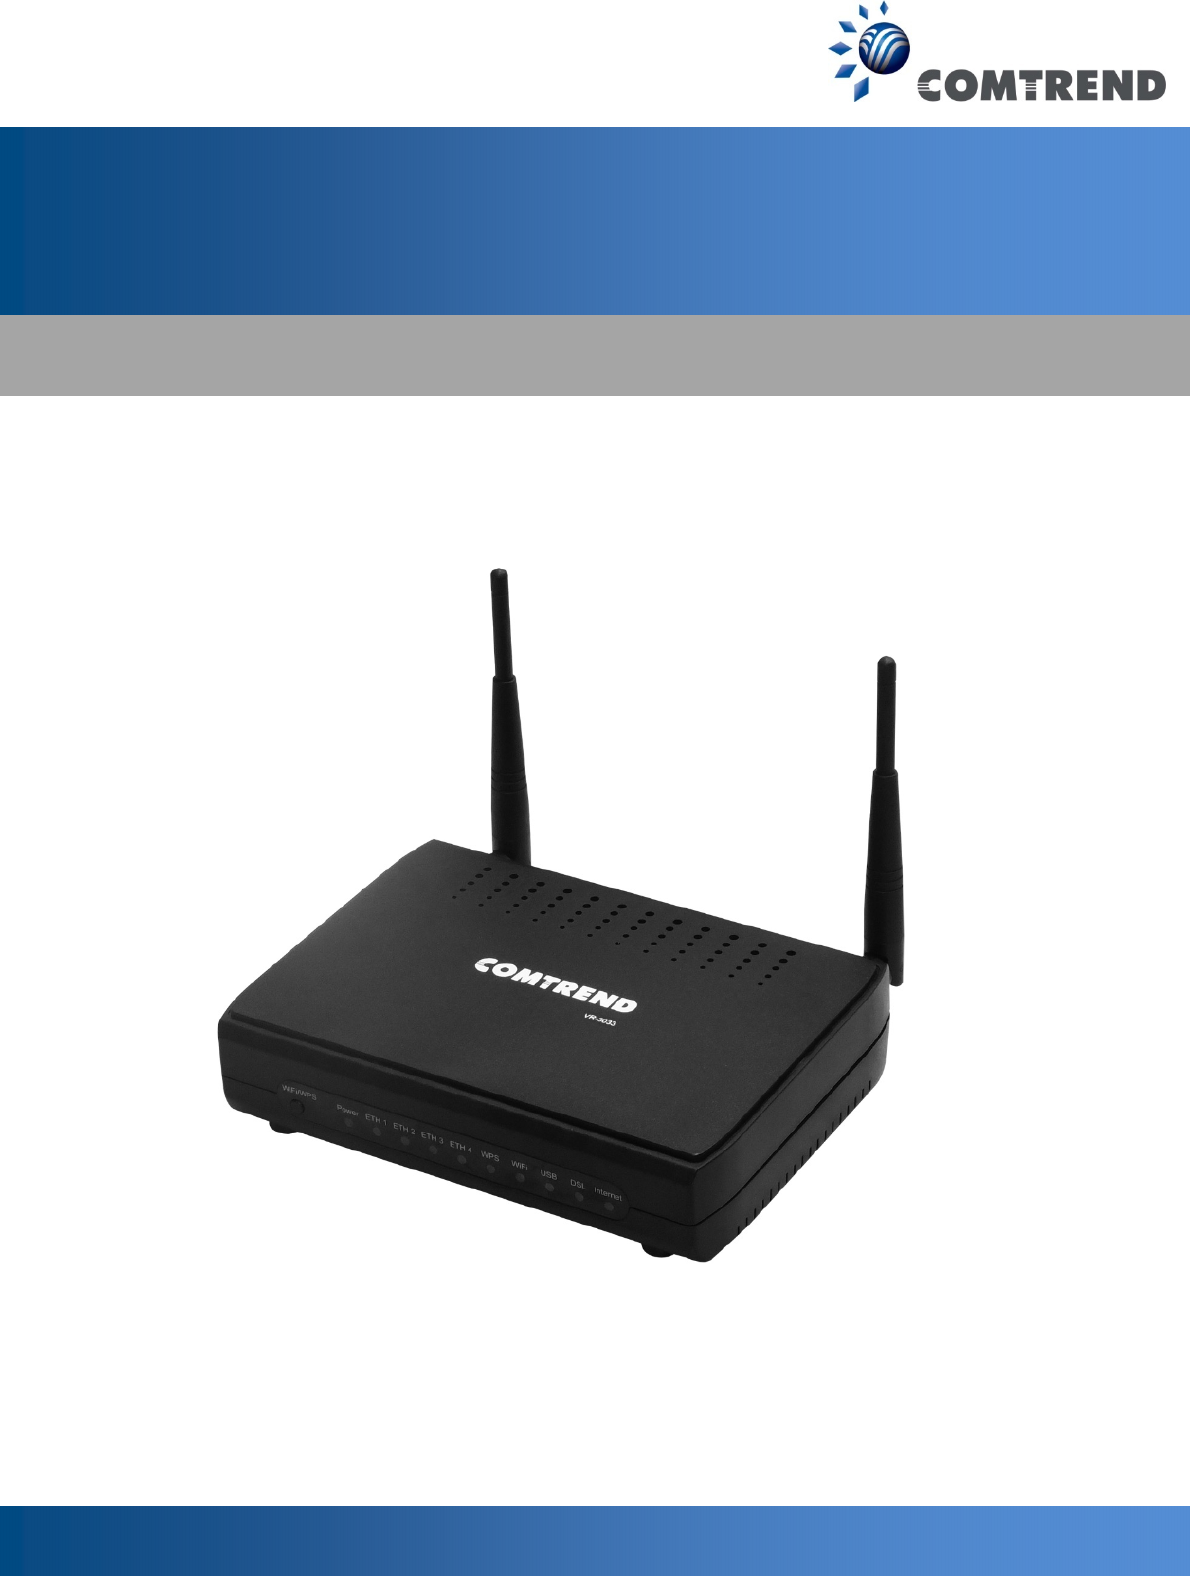 Comtrend VR-3033U Multi-DSL Wireless Router User Manual UM VR3033 A1 1 02